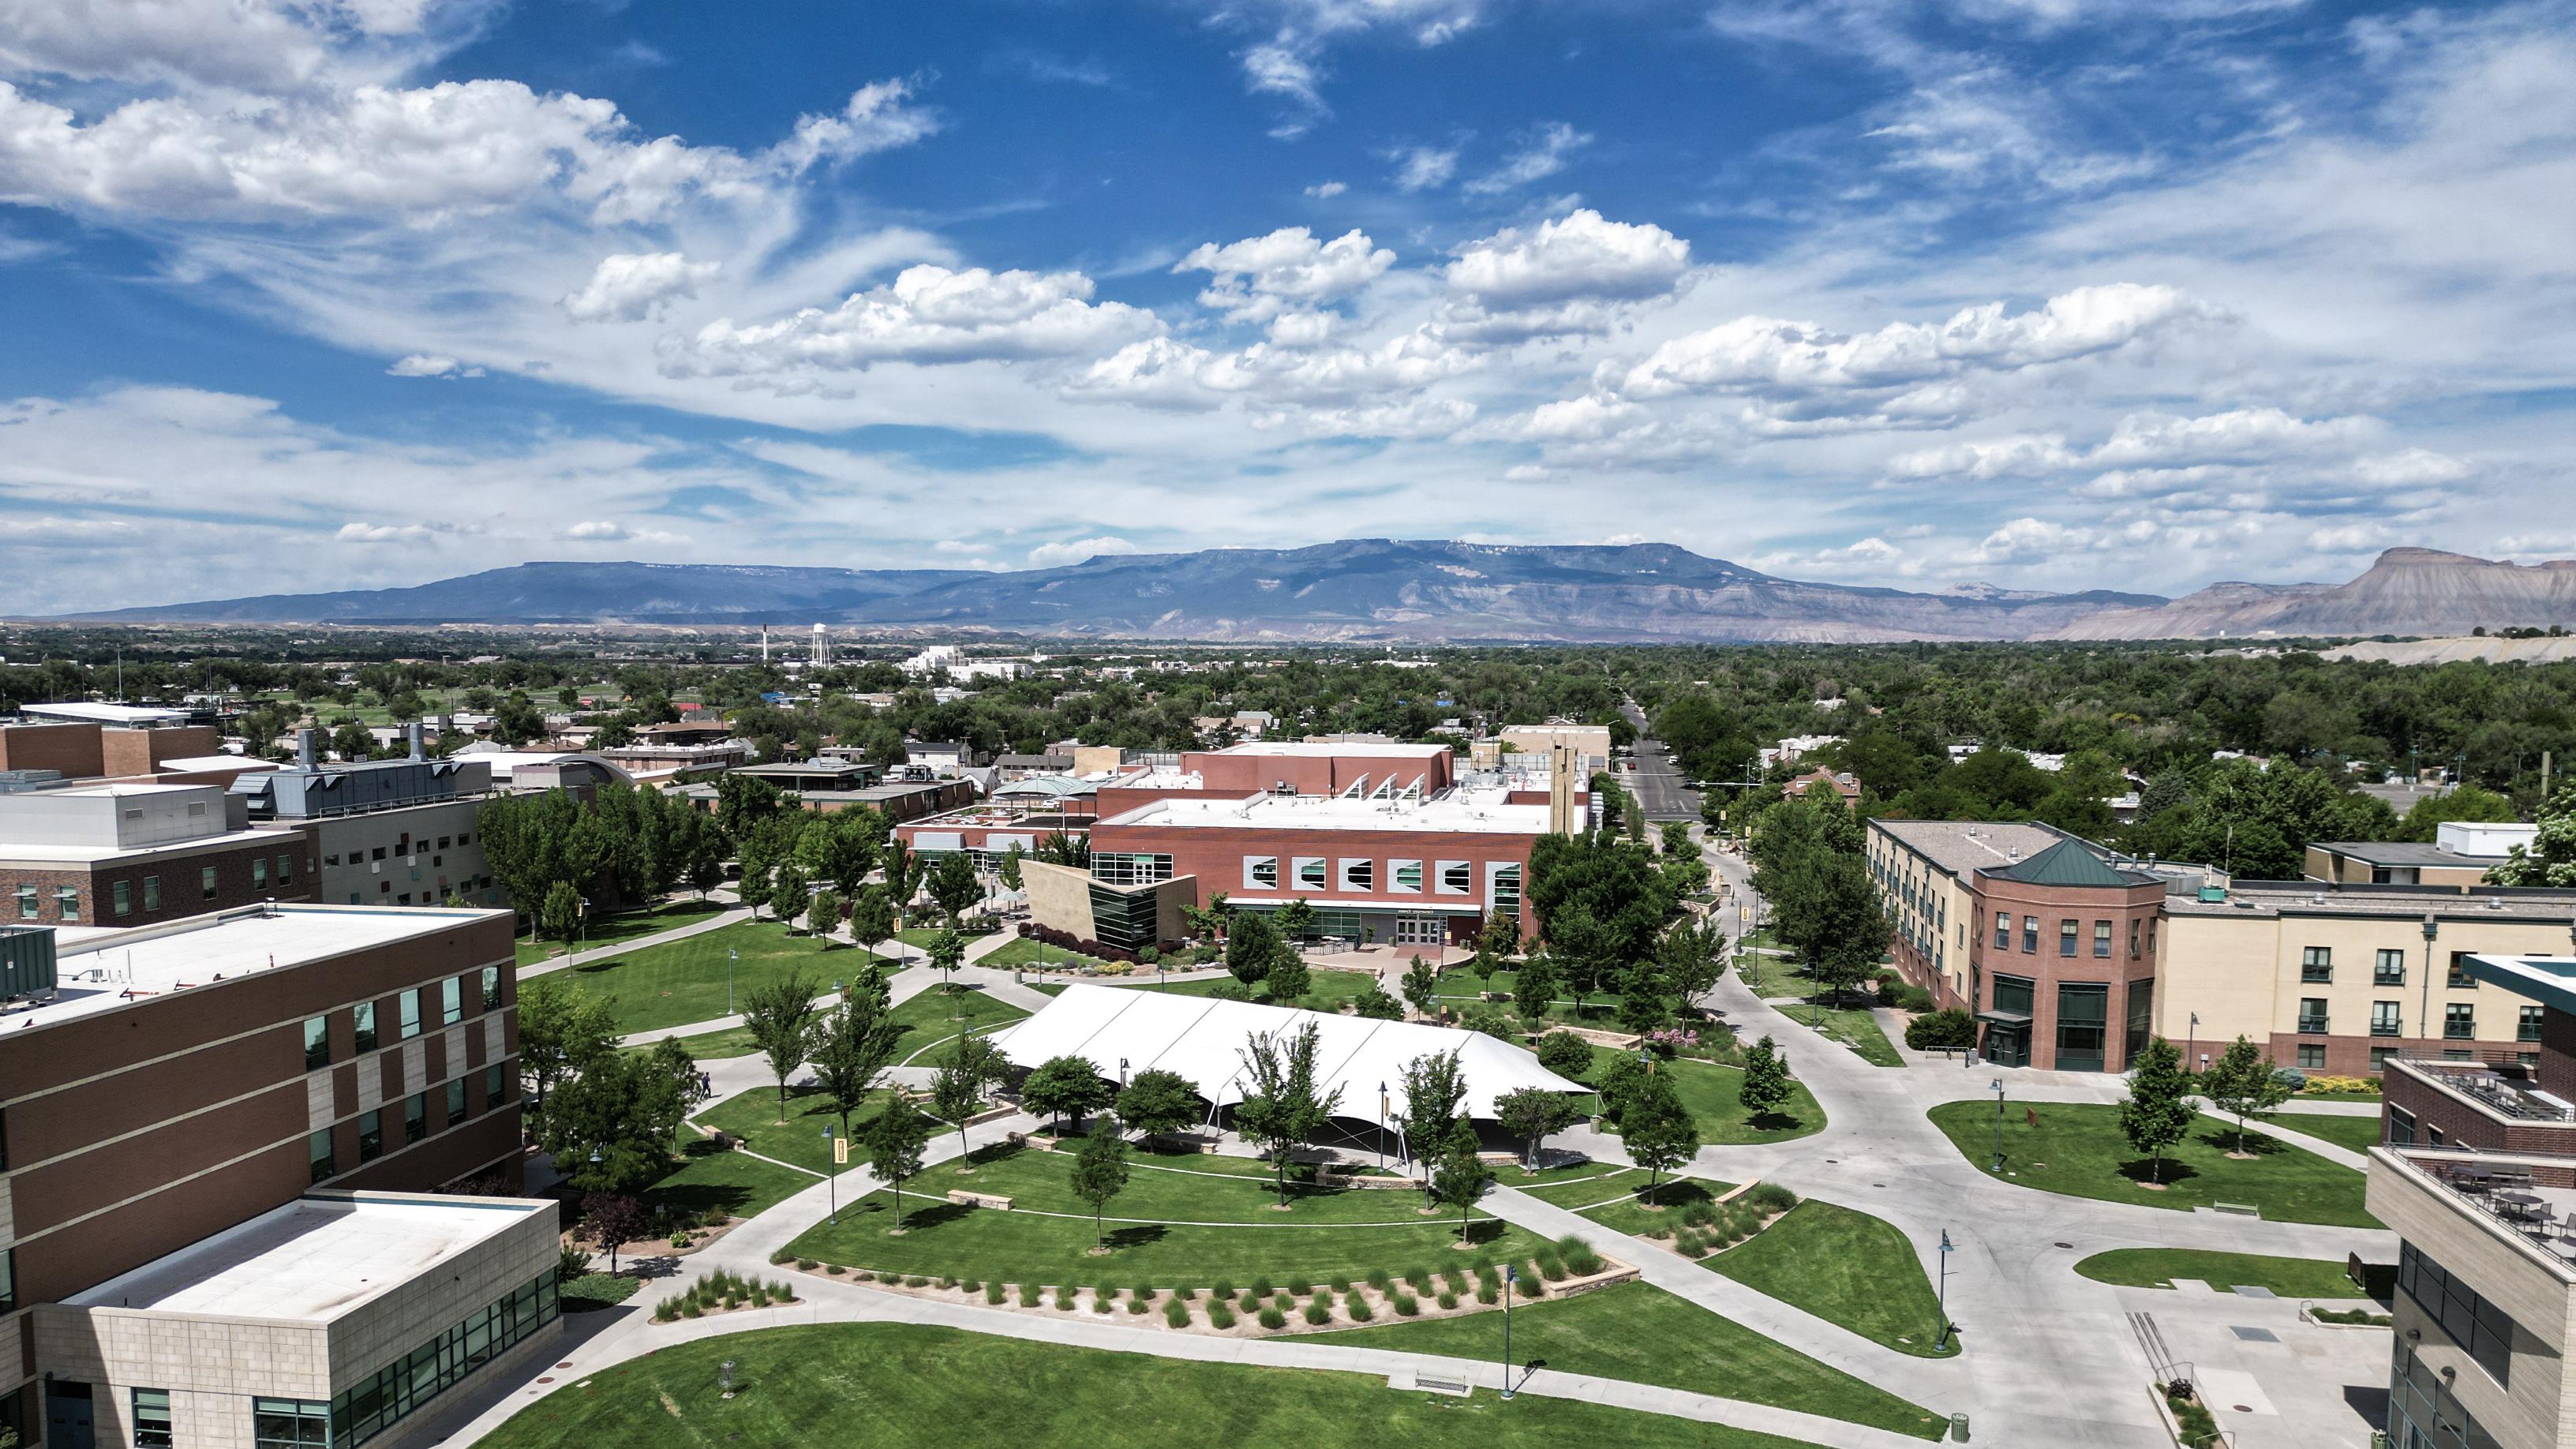 The CMU campus & the Grand Mesa on the horizon